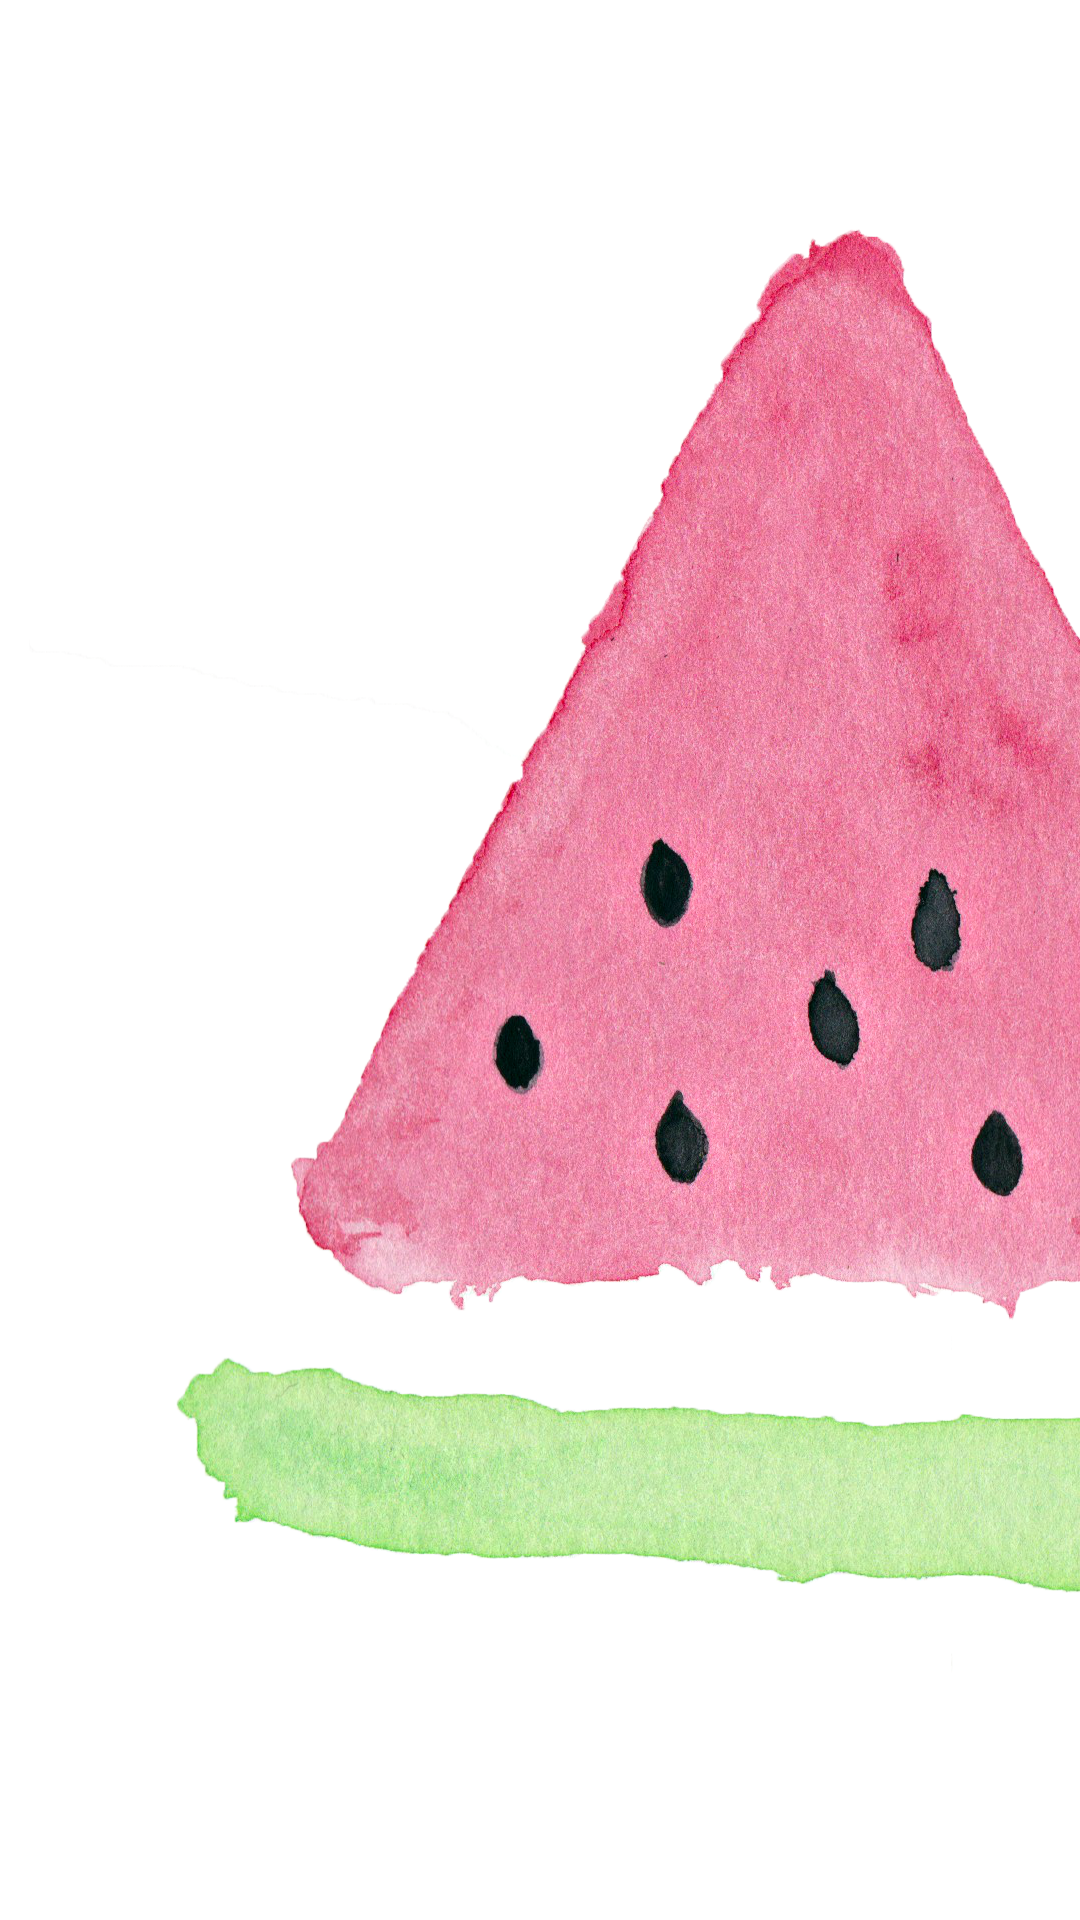 wassermelone wallpaper iphone,melone,wassermelone,rosa,obst,essen